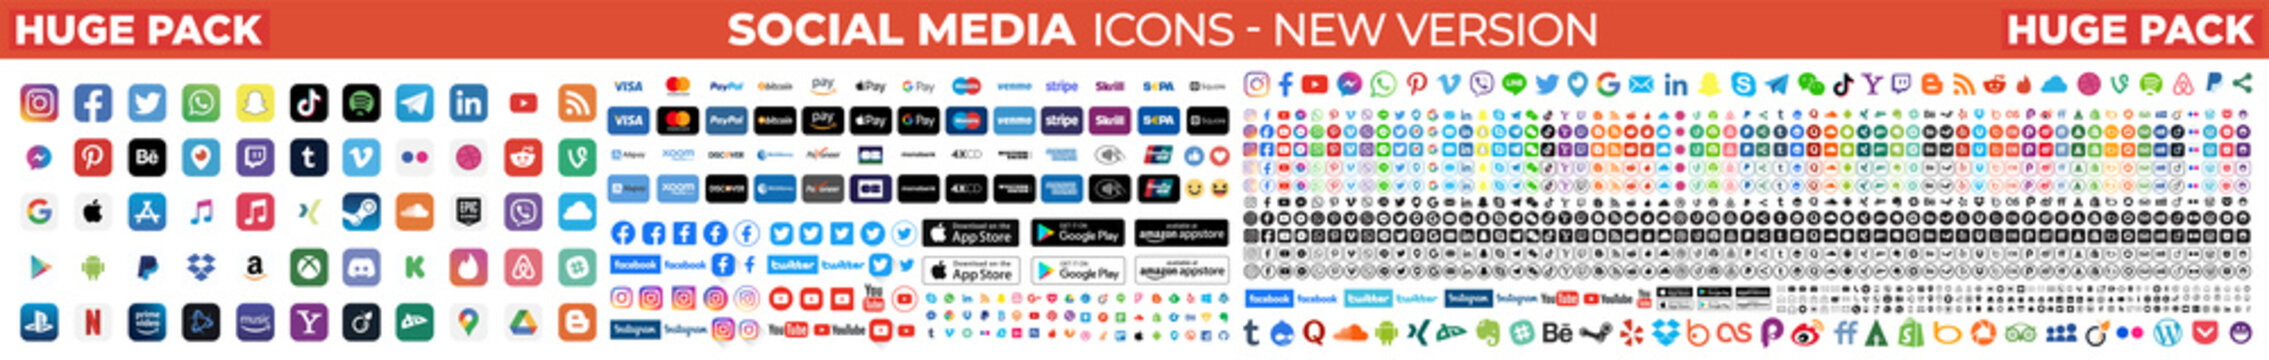 Social media icons & logos